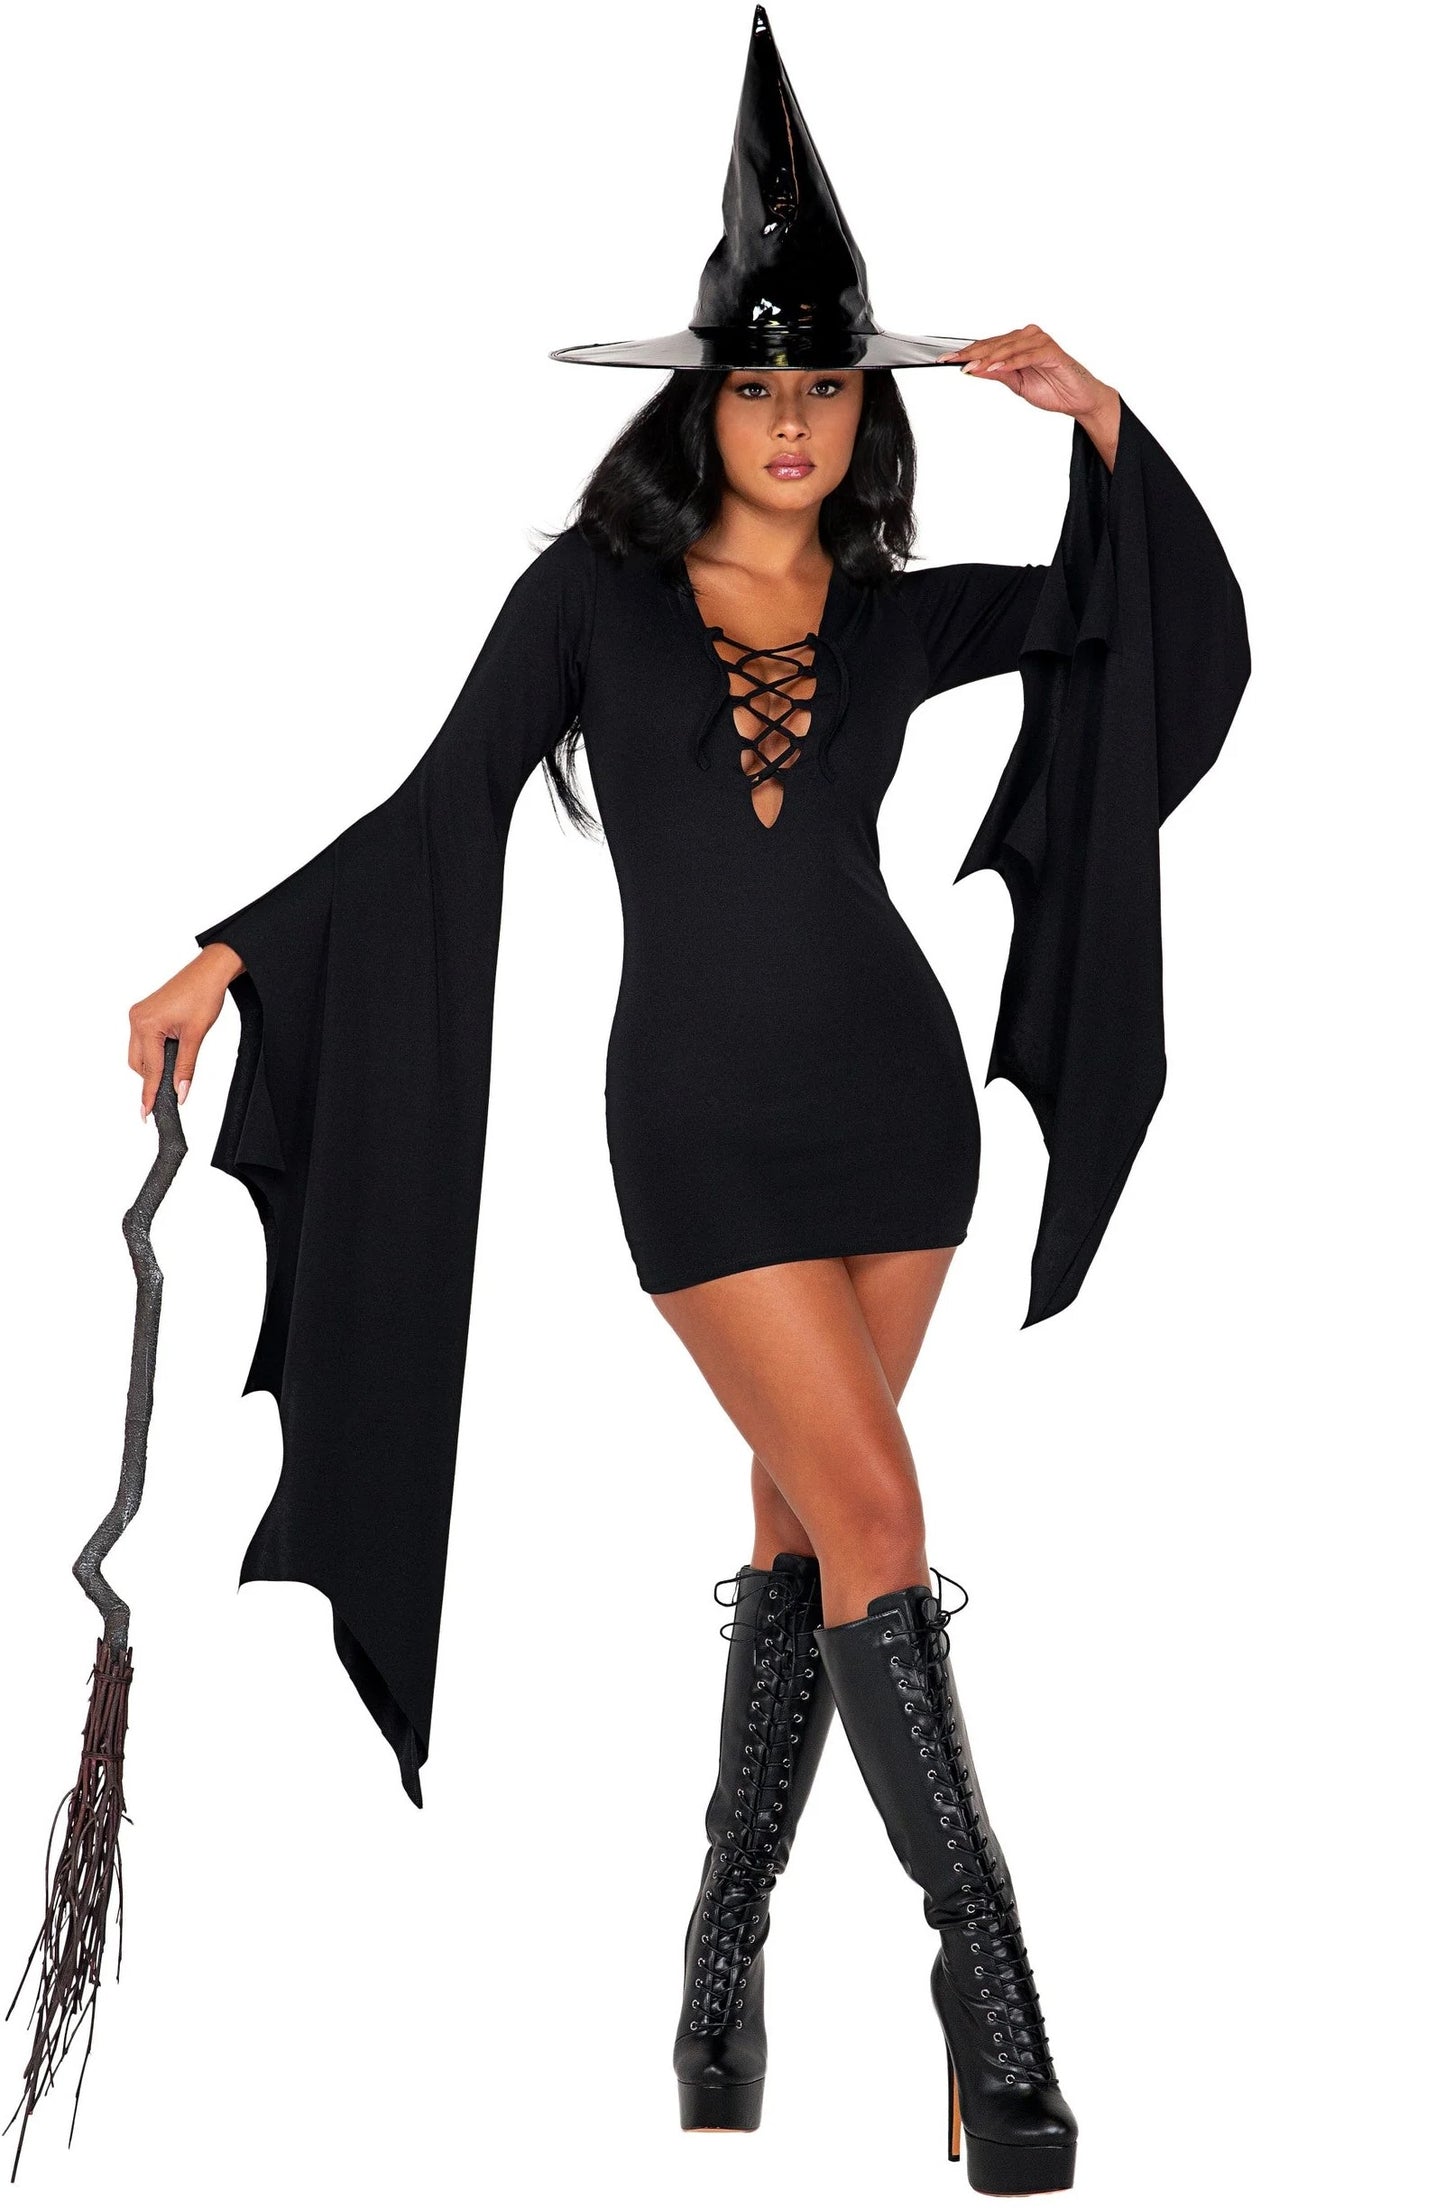 Midnight Witch costume